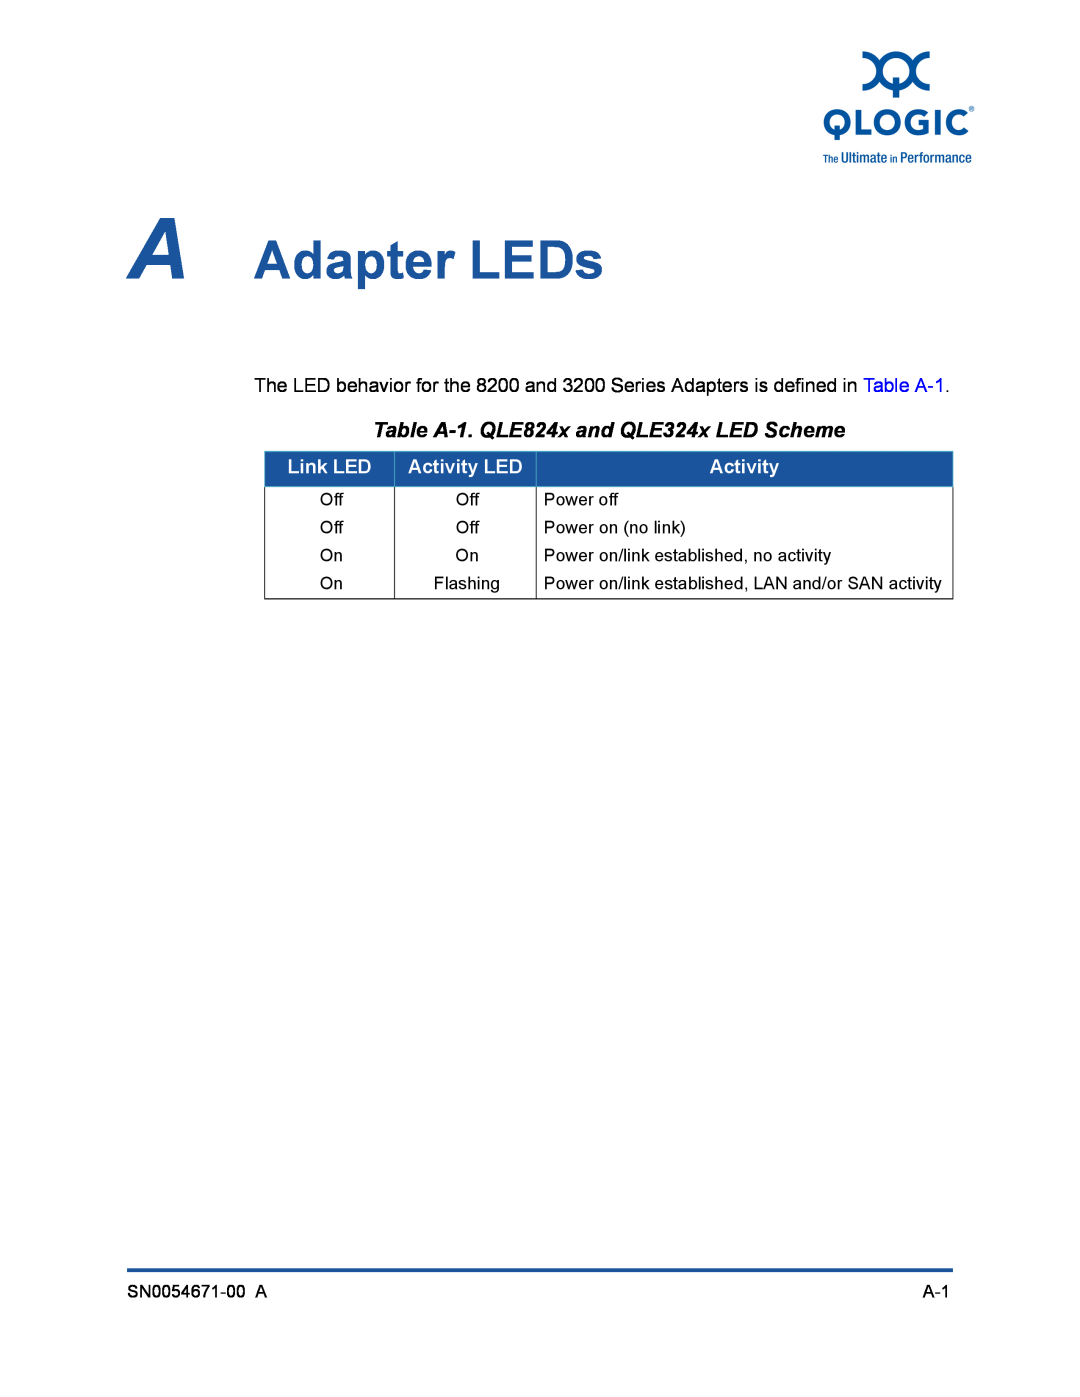 Q-Logic 3200, 8200 manual A Adapter LEDs, Table A-1. QLE824x and QLE324x LED Scheme, Link LED, Activity LED 